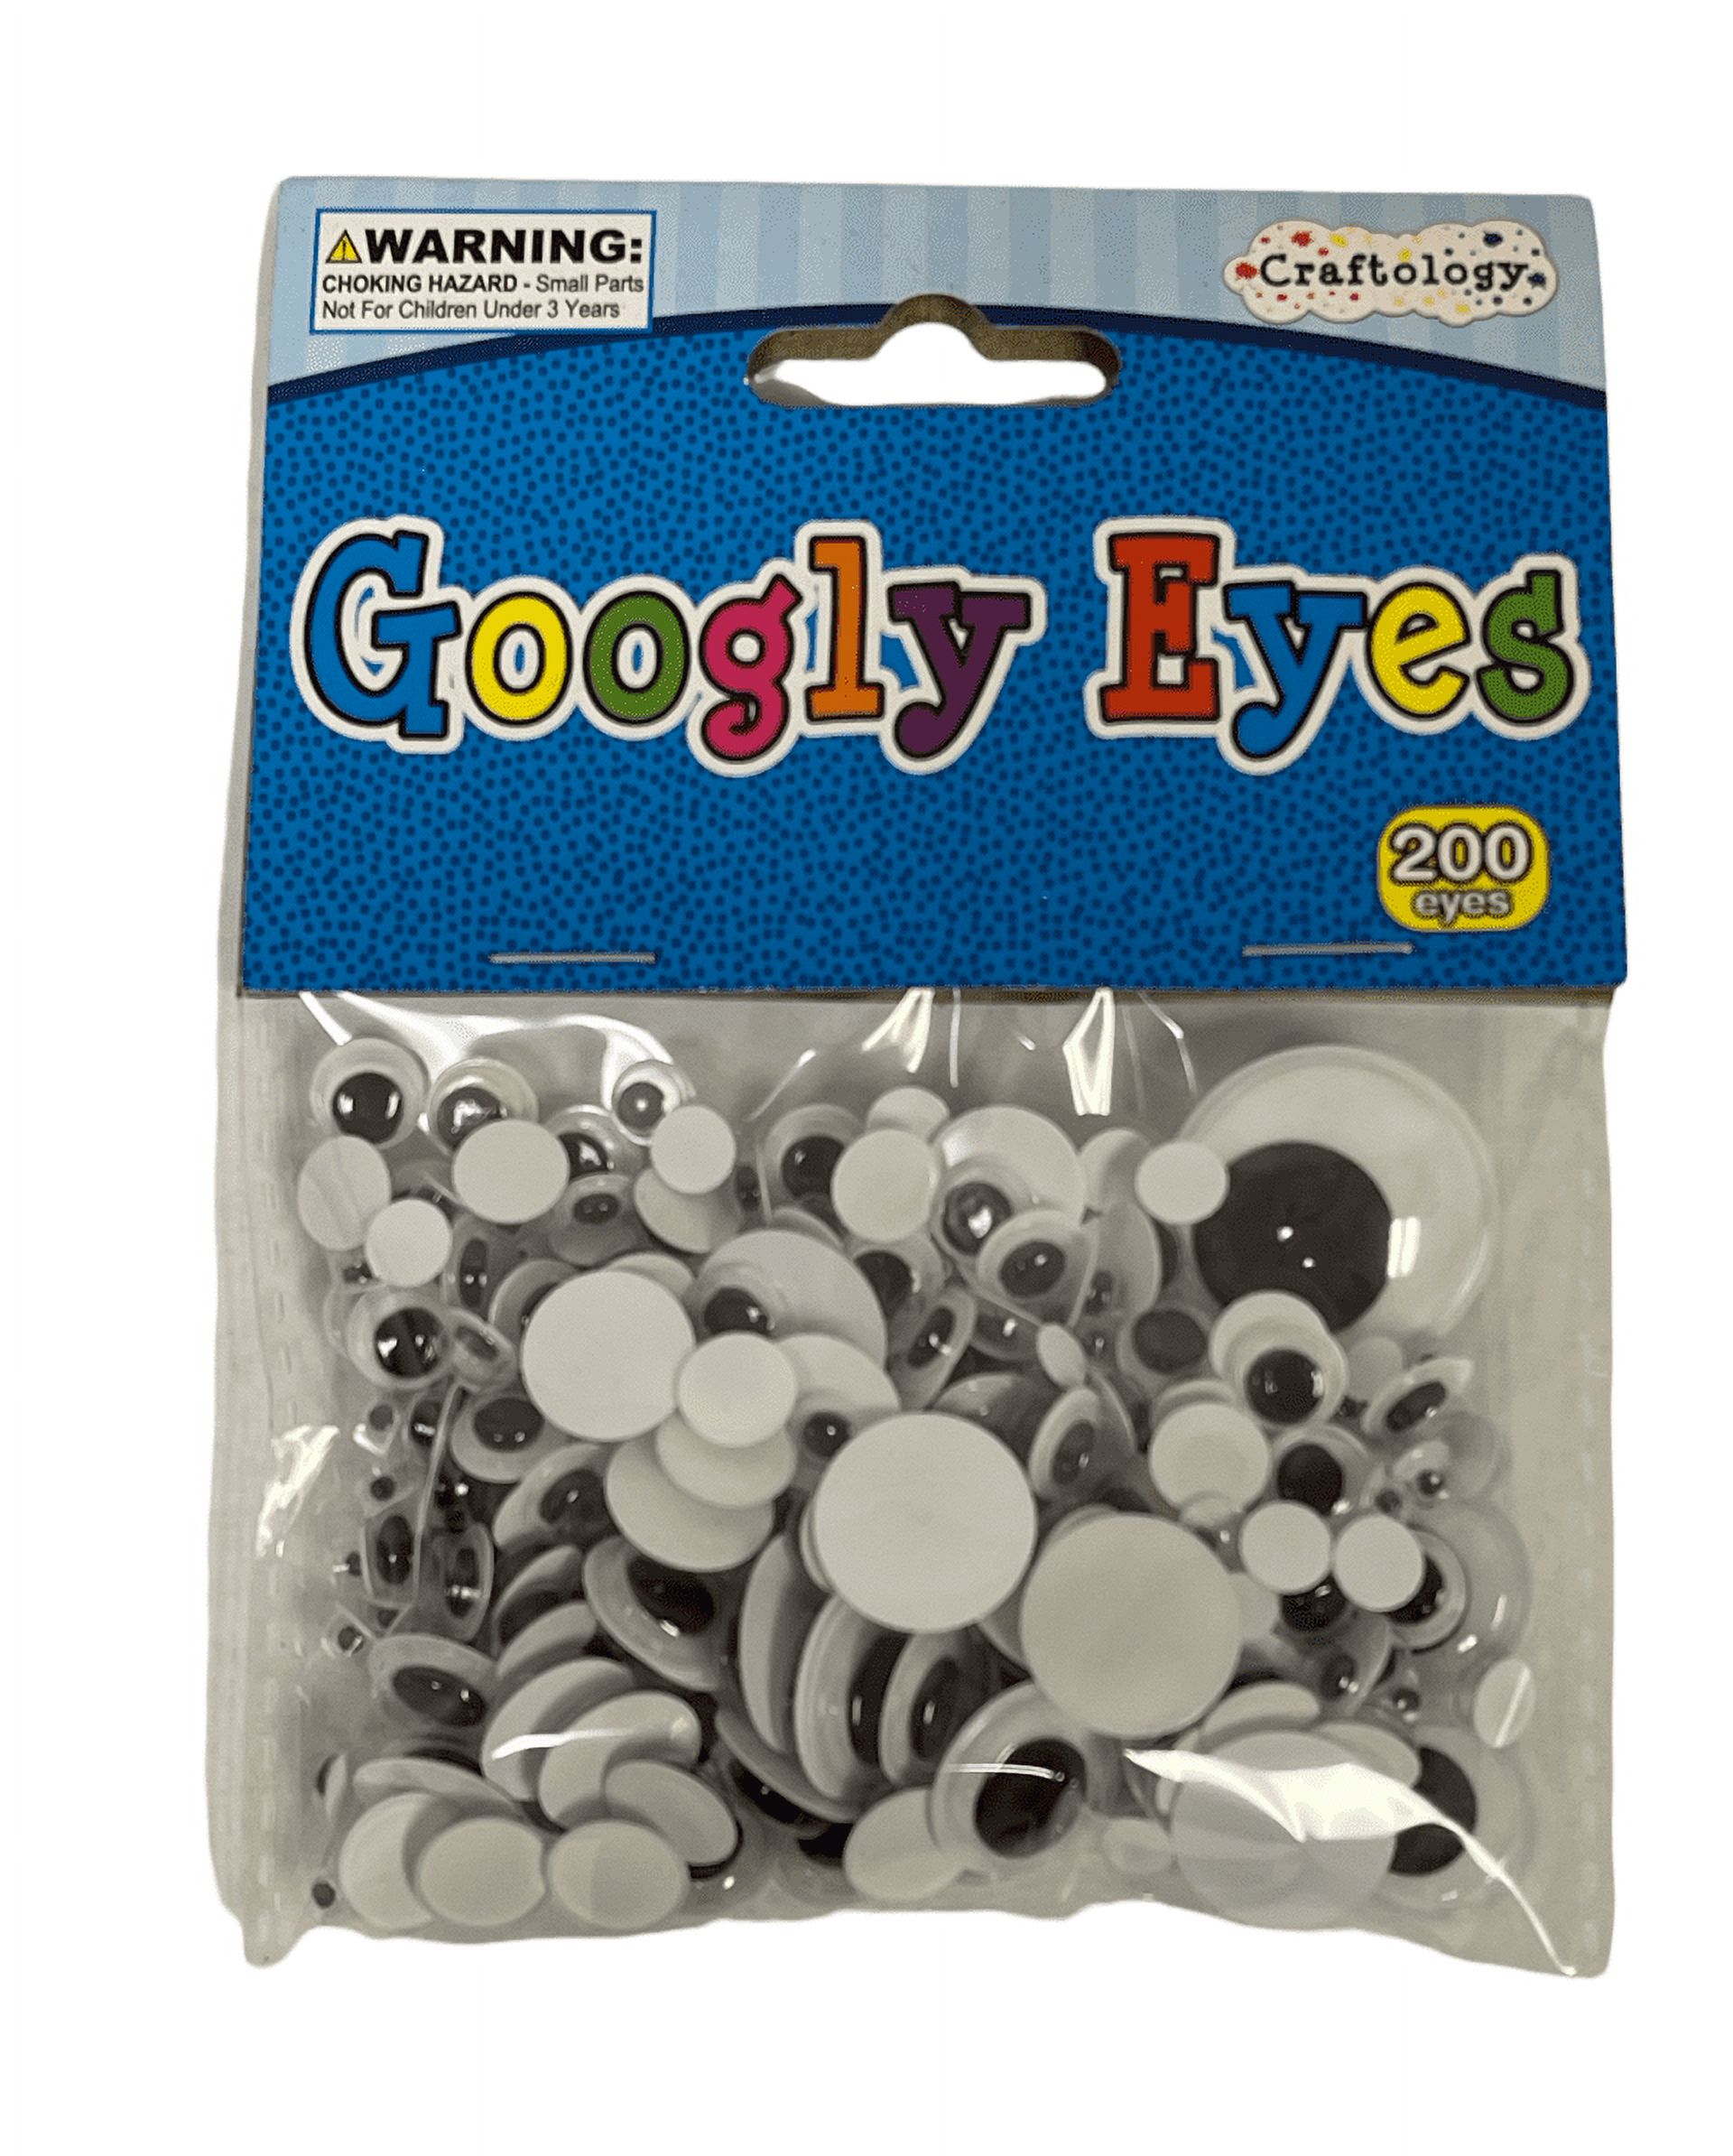 Craftology Googly Eyes Assorted Sizes 200 Eyes